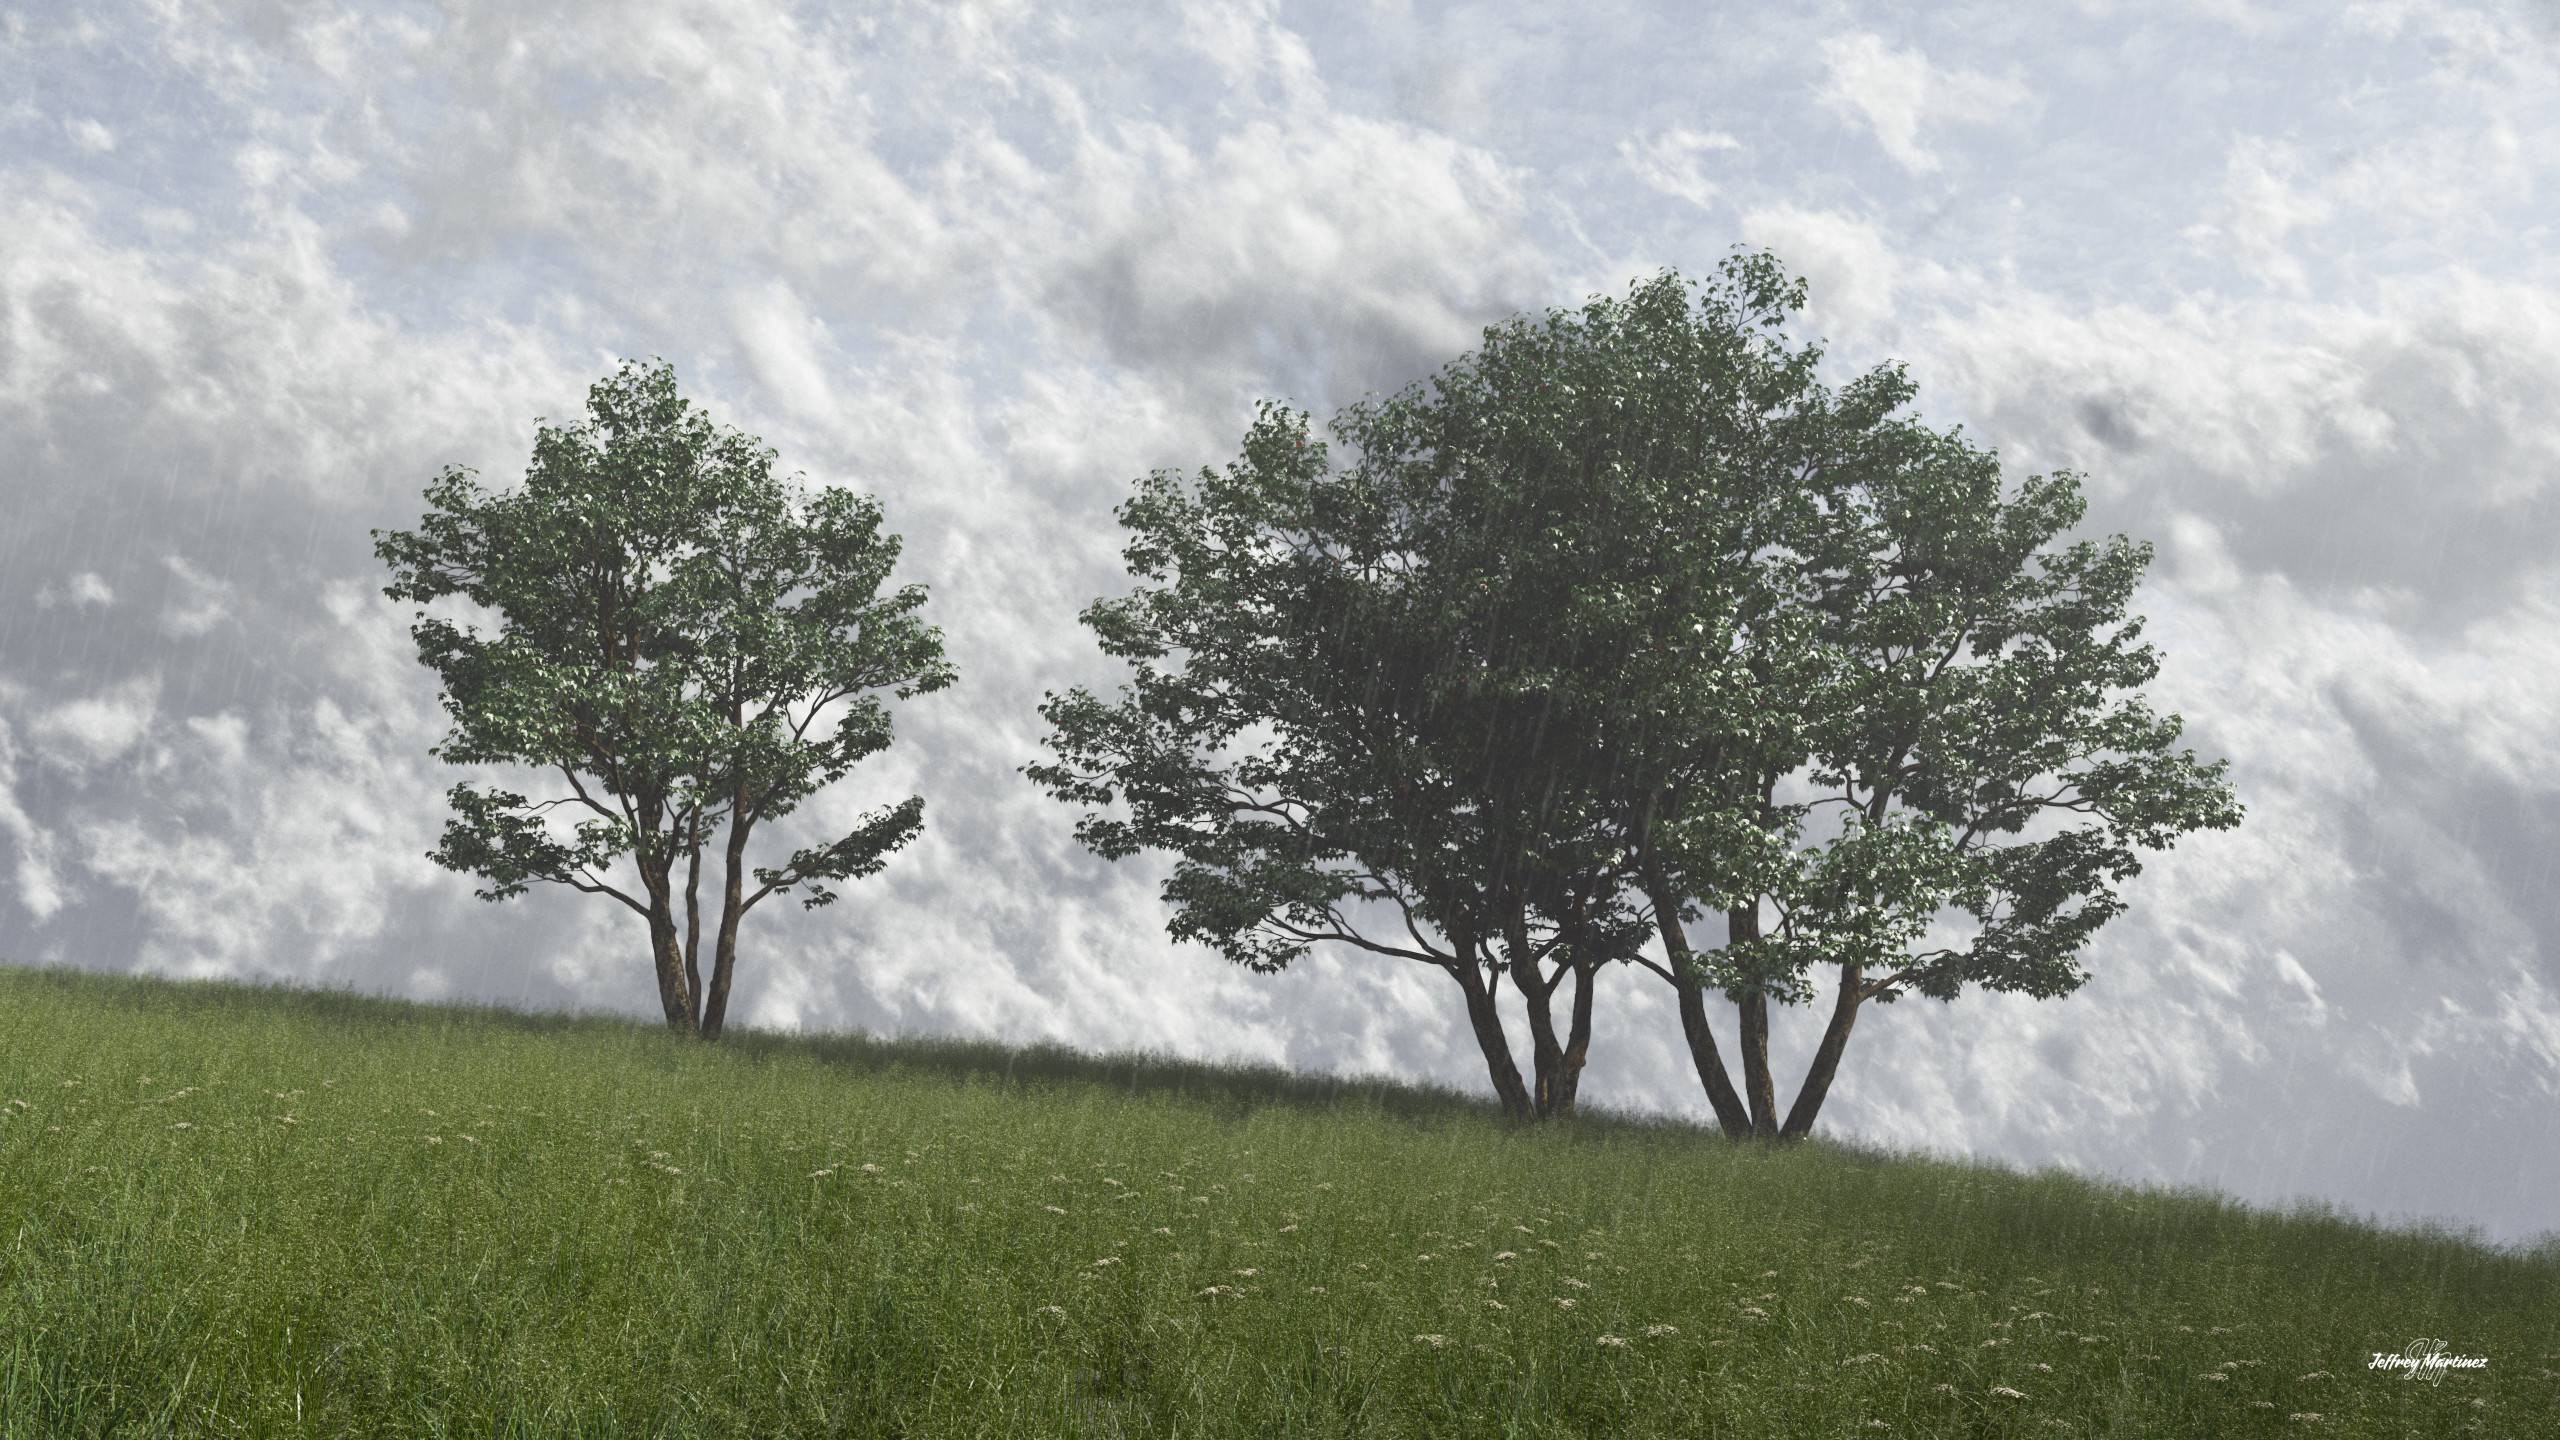 Trees on a Hill - Rain
20220622TG